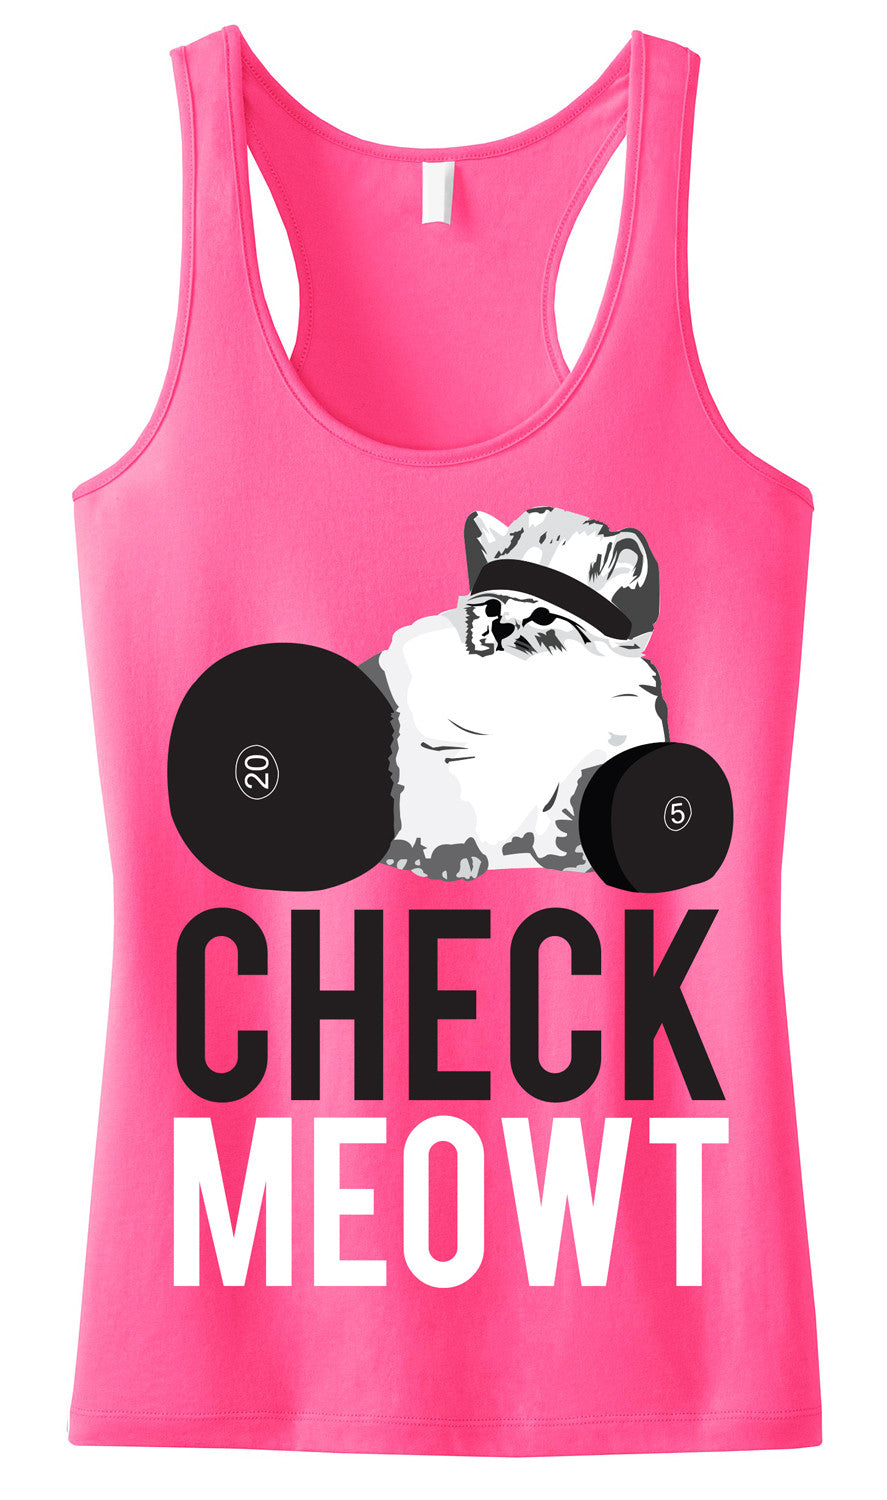 CHECK MEOWT Pink Workout Tank Top